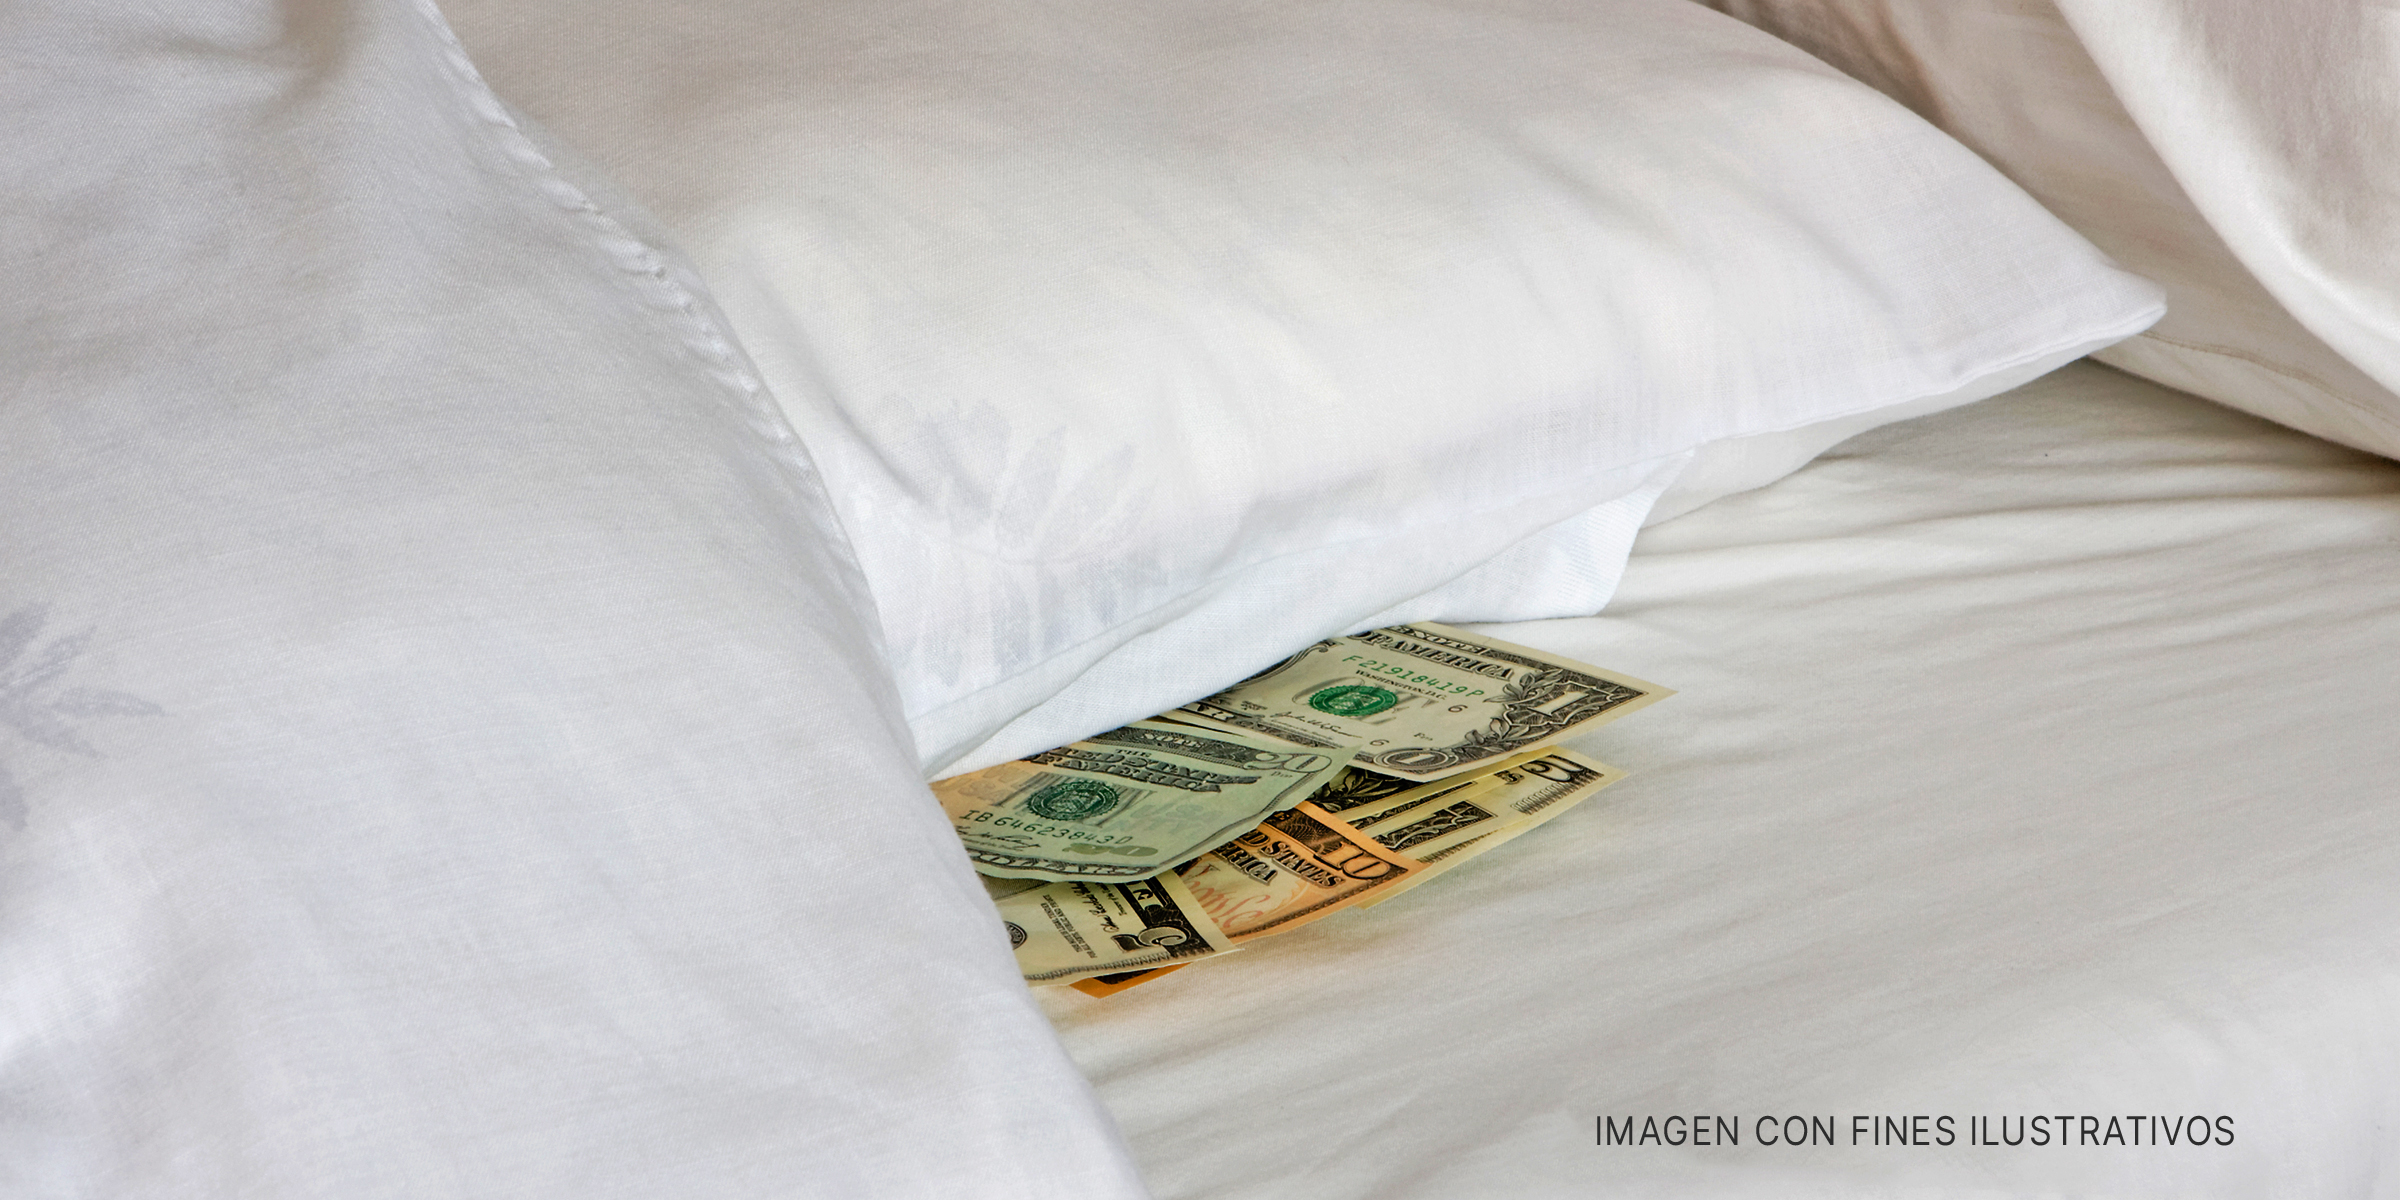 Dinero escondido bajo una almohada. | Foto: Shutterstock